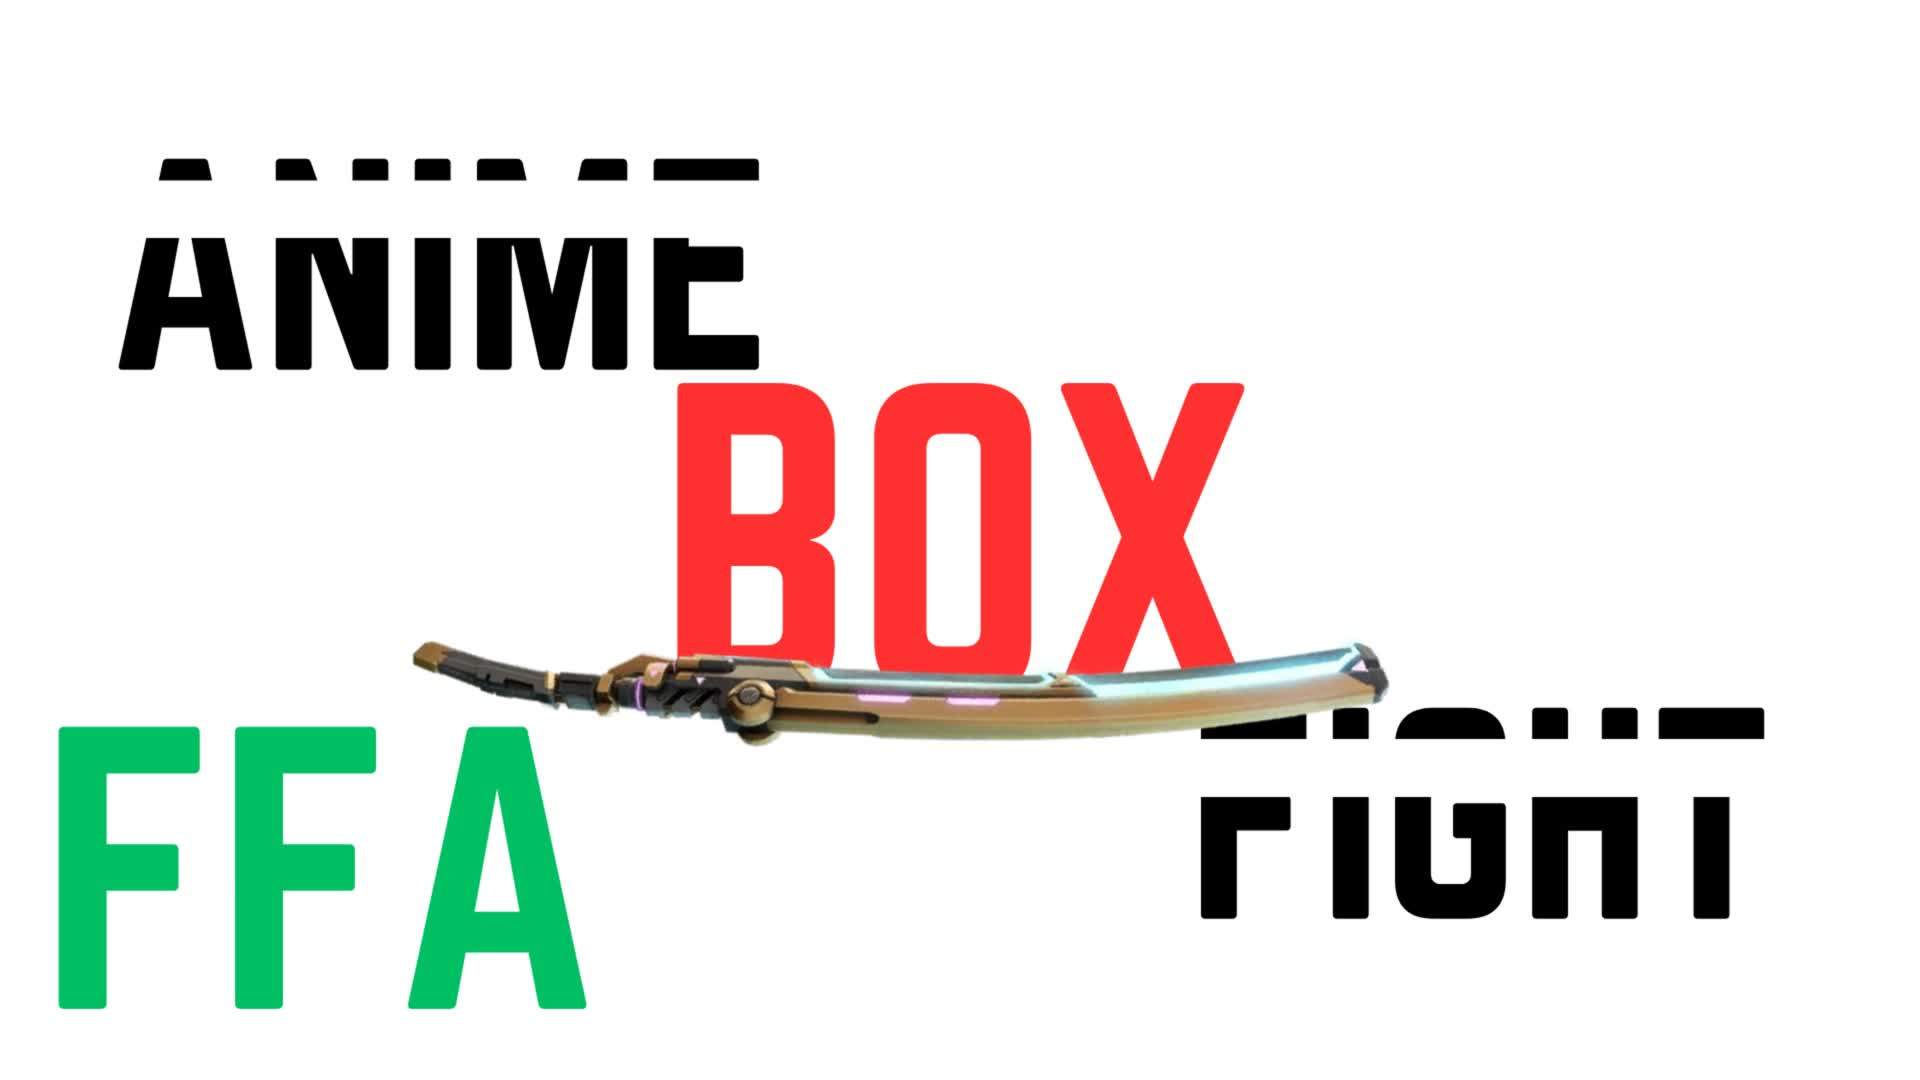 ANIME BOX FIGHT FFA